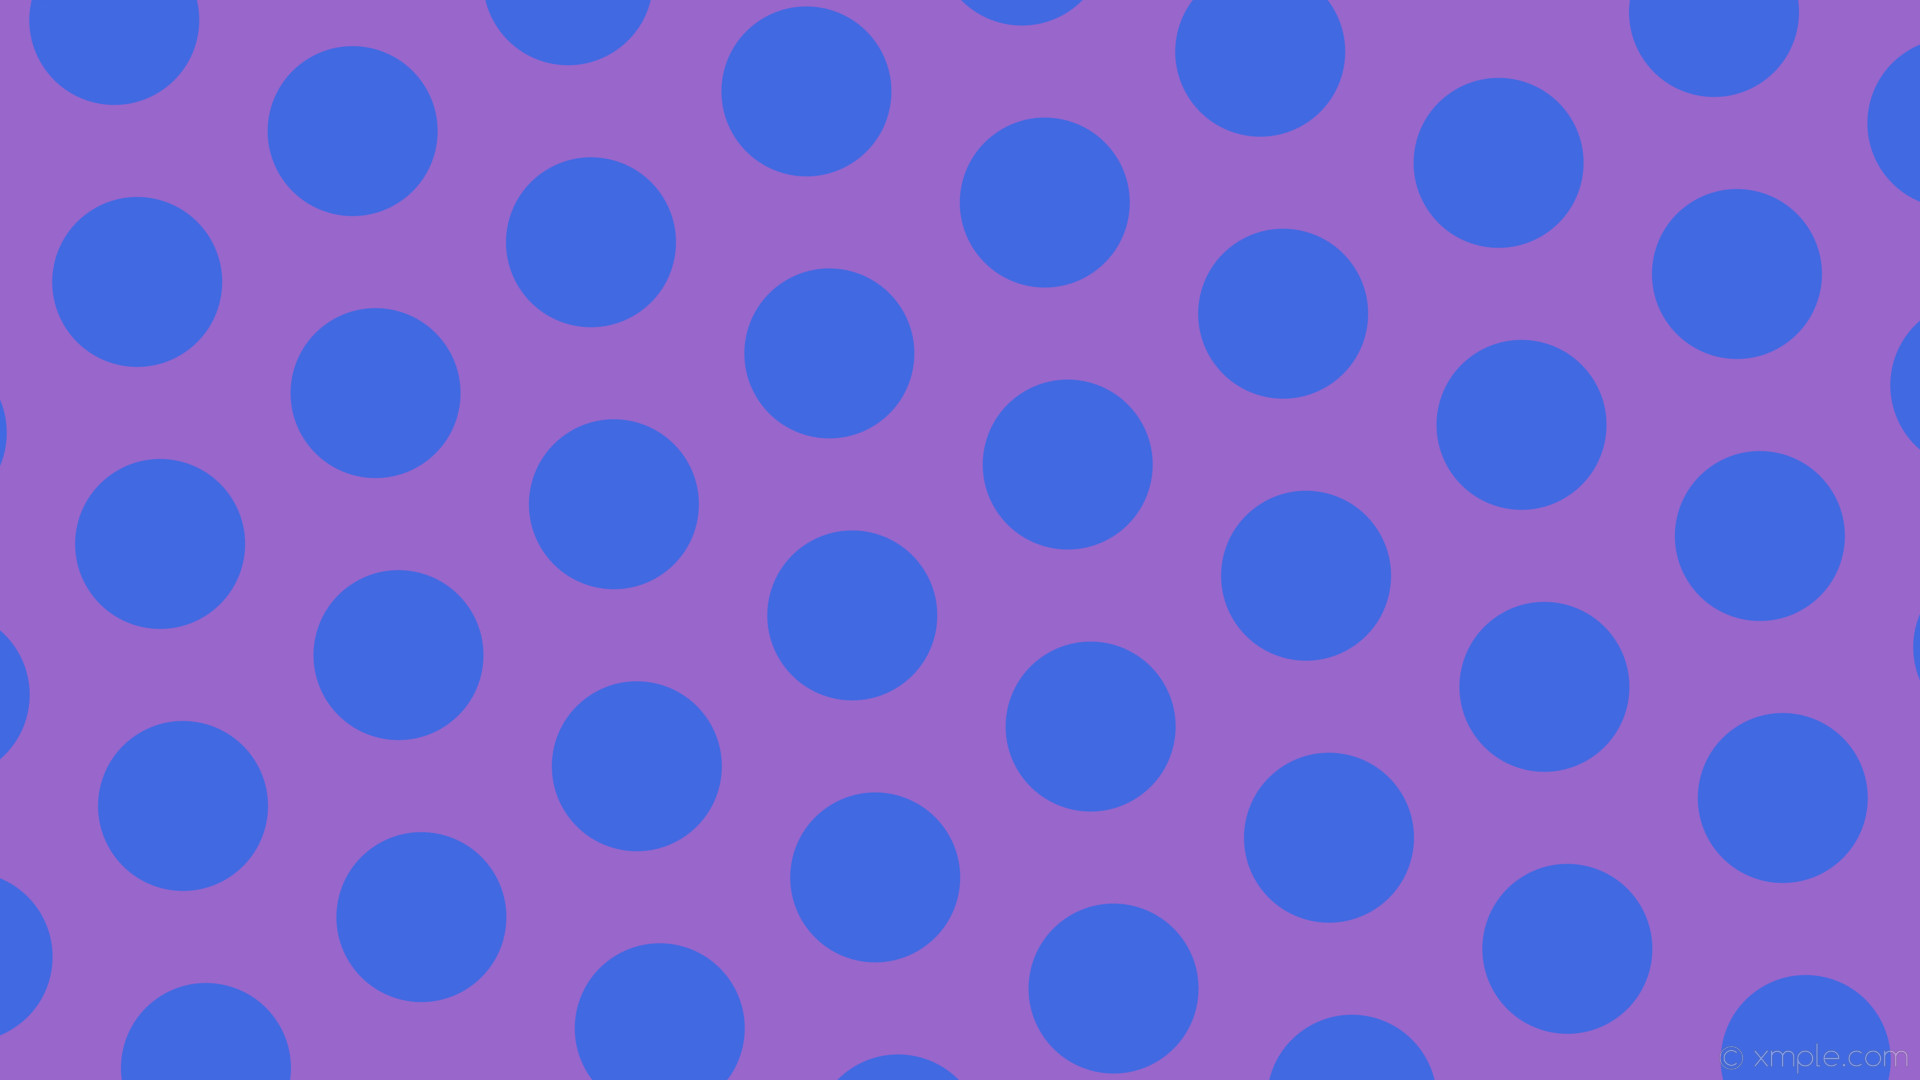 1920x1080 wallpaper purple polka hexagon dots blue amethyst royal blue #9966cc  #4169e1 diagonal 35Â°